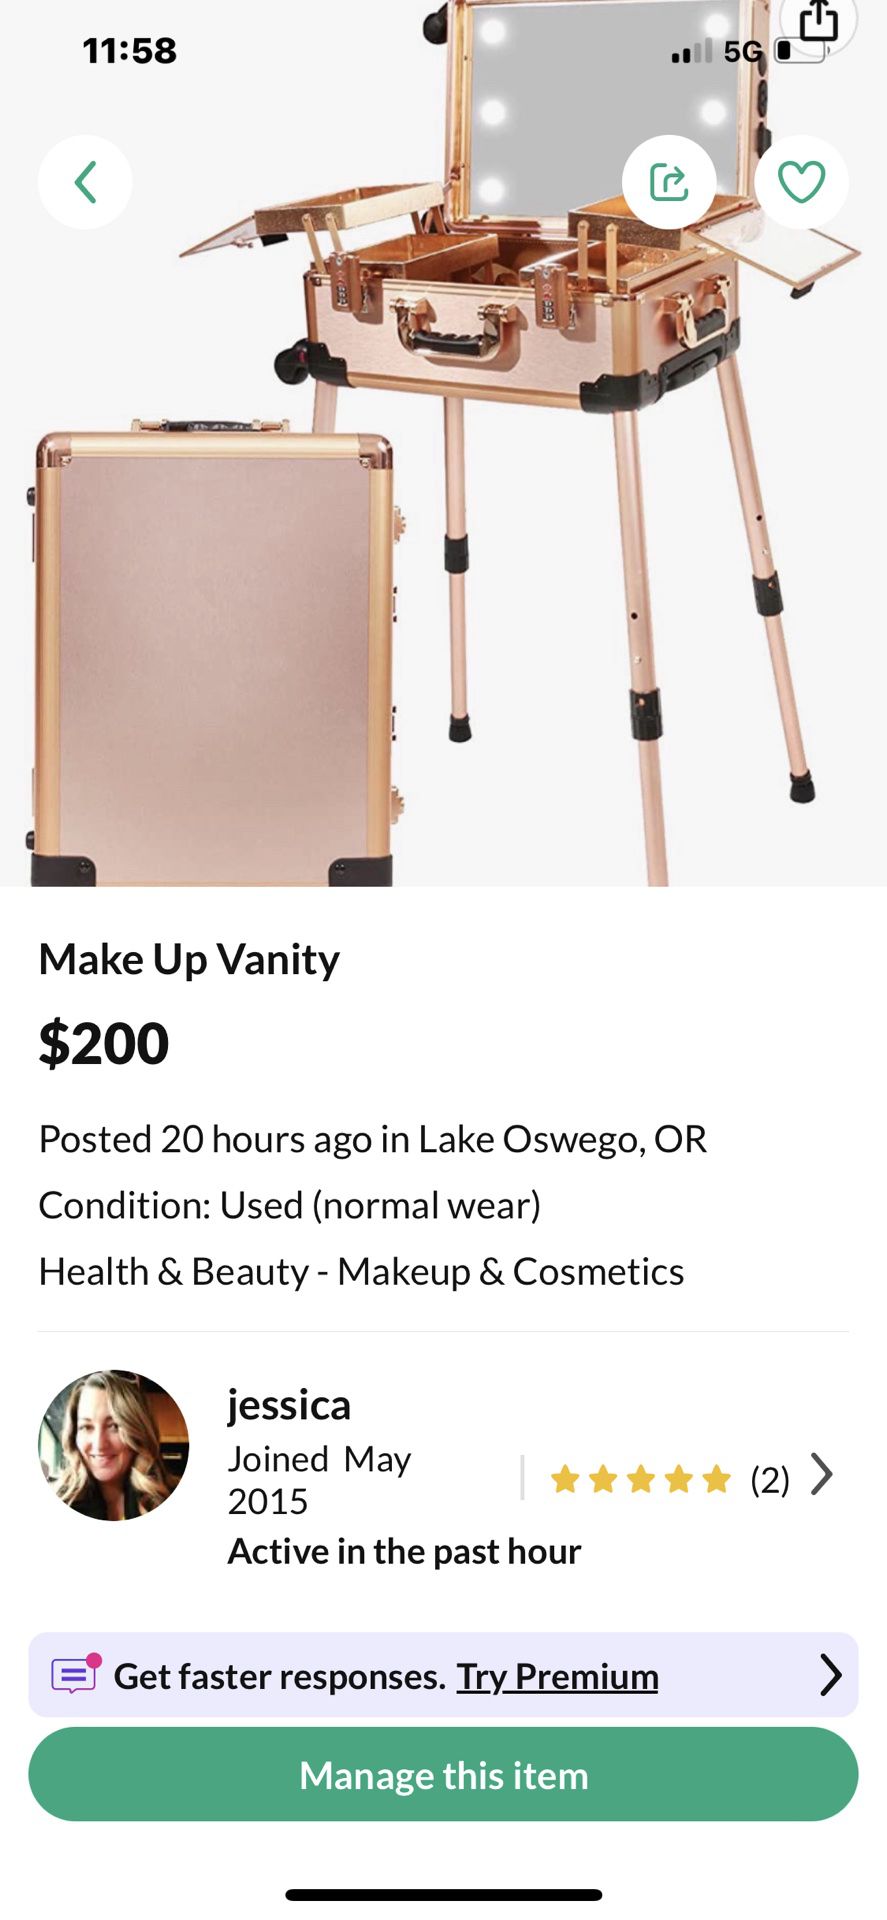 Make Up Vanity